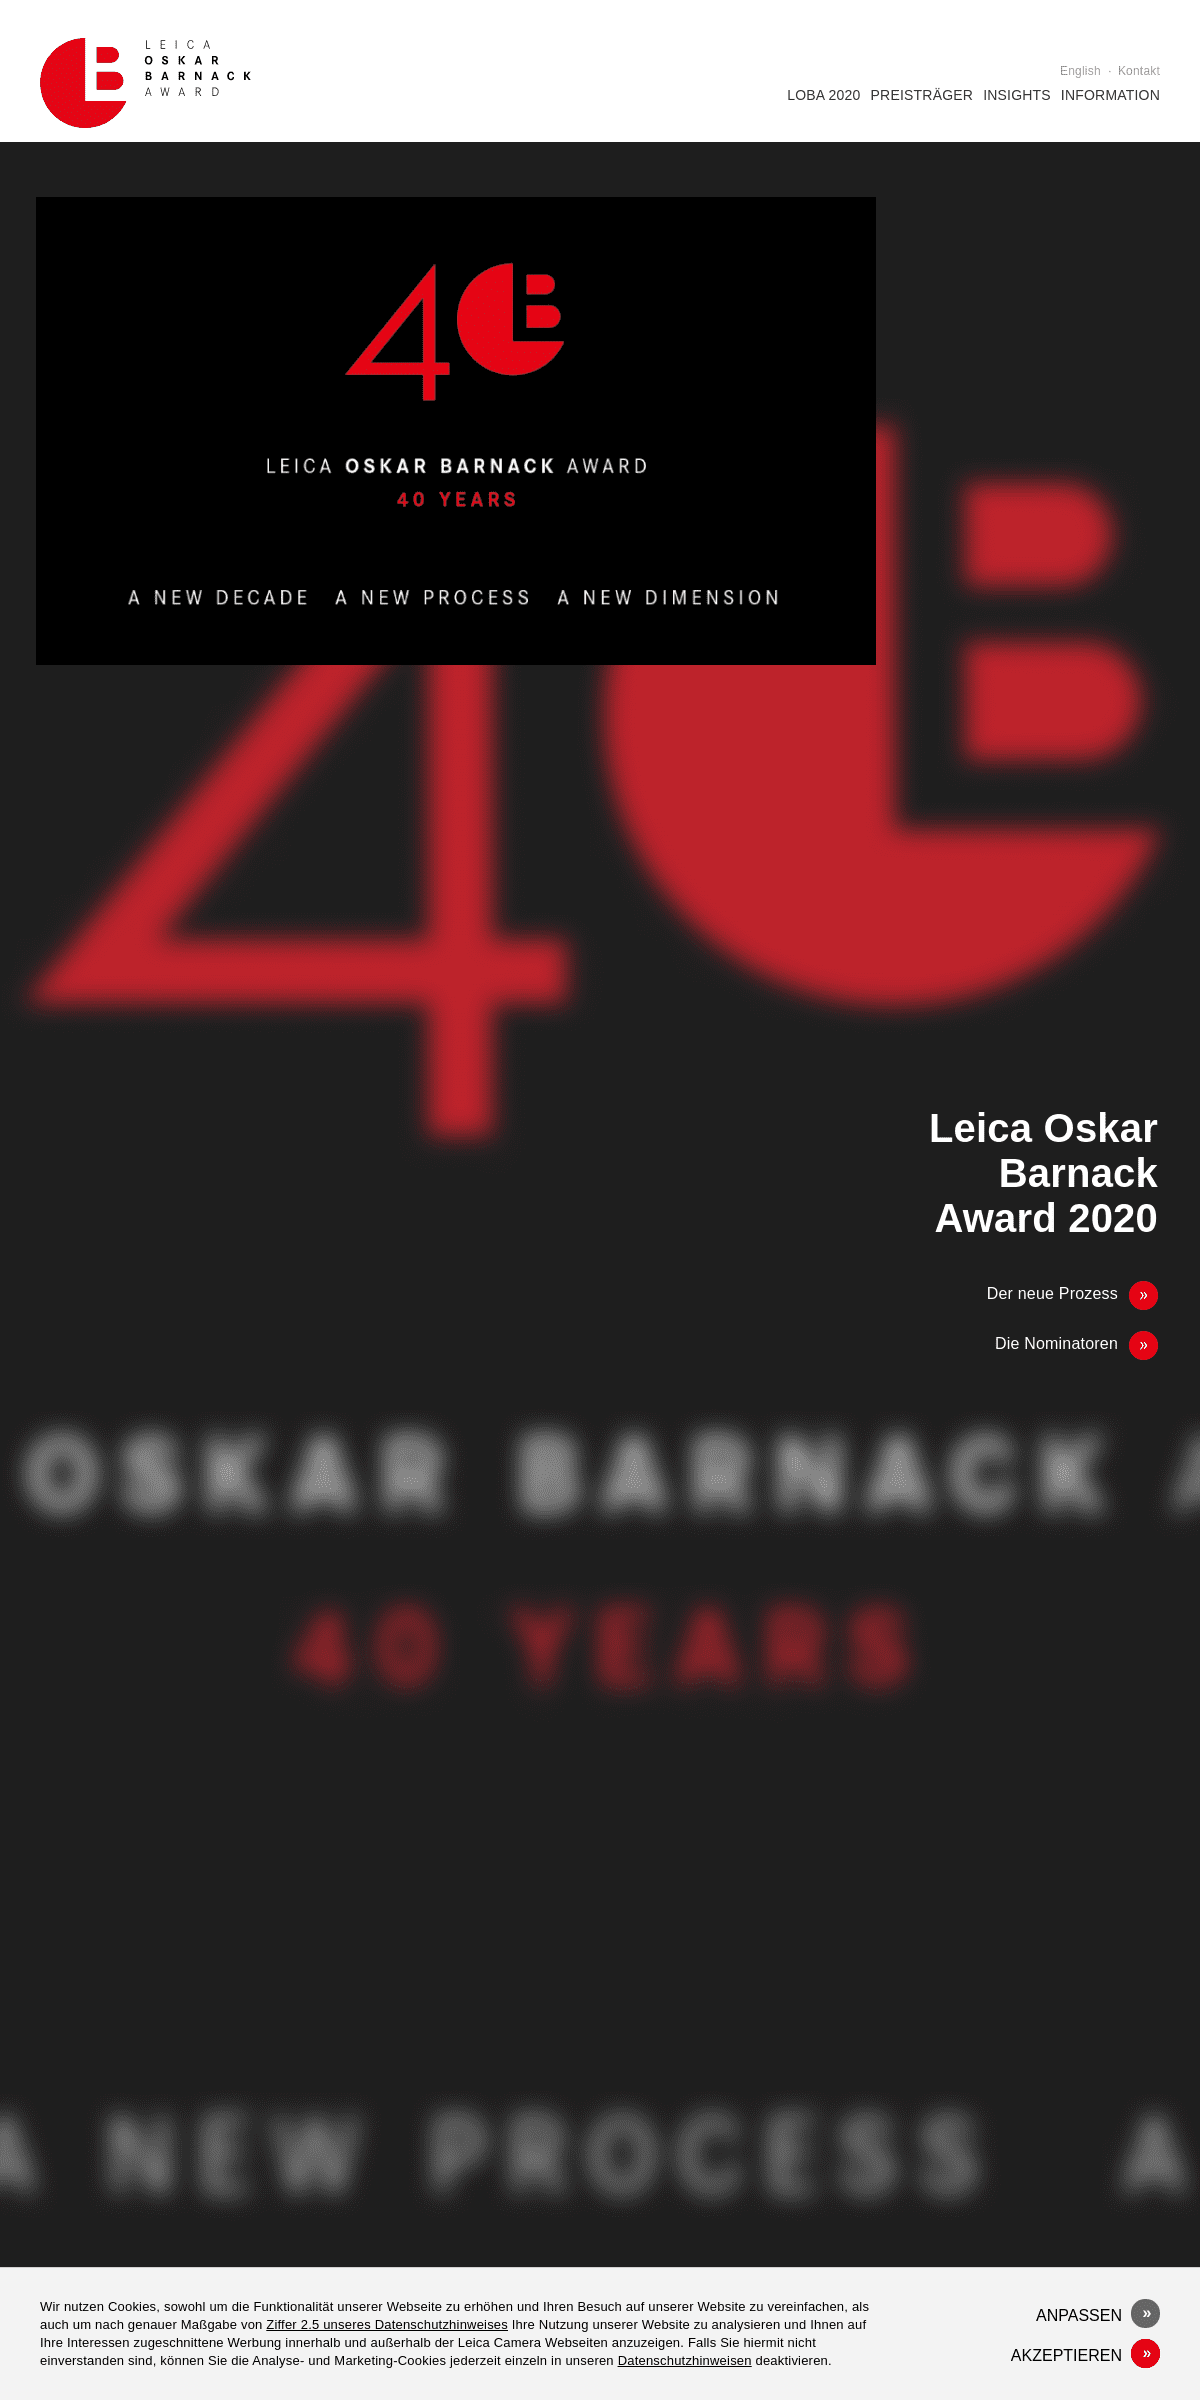 A complete backup of leica-oskar-barnack-award.com